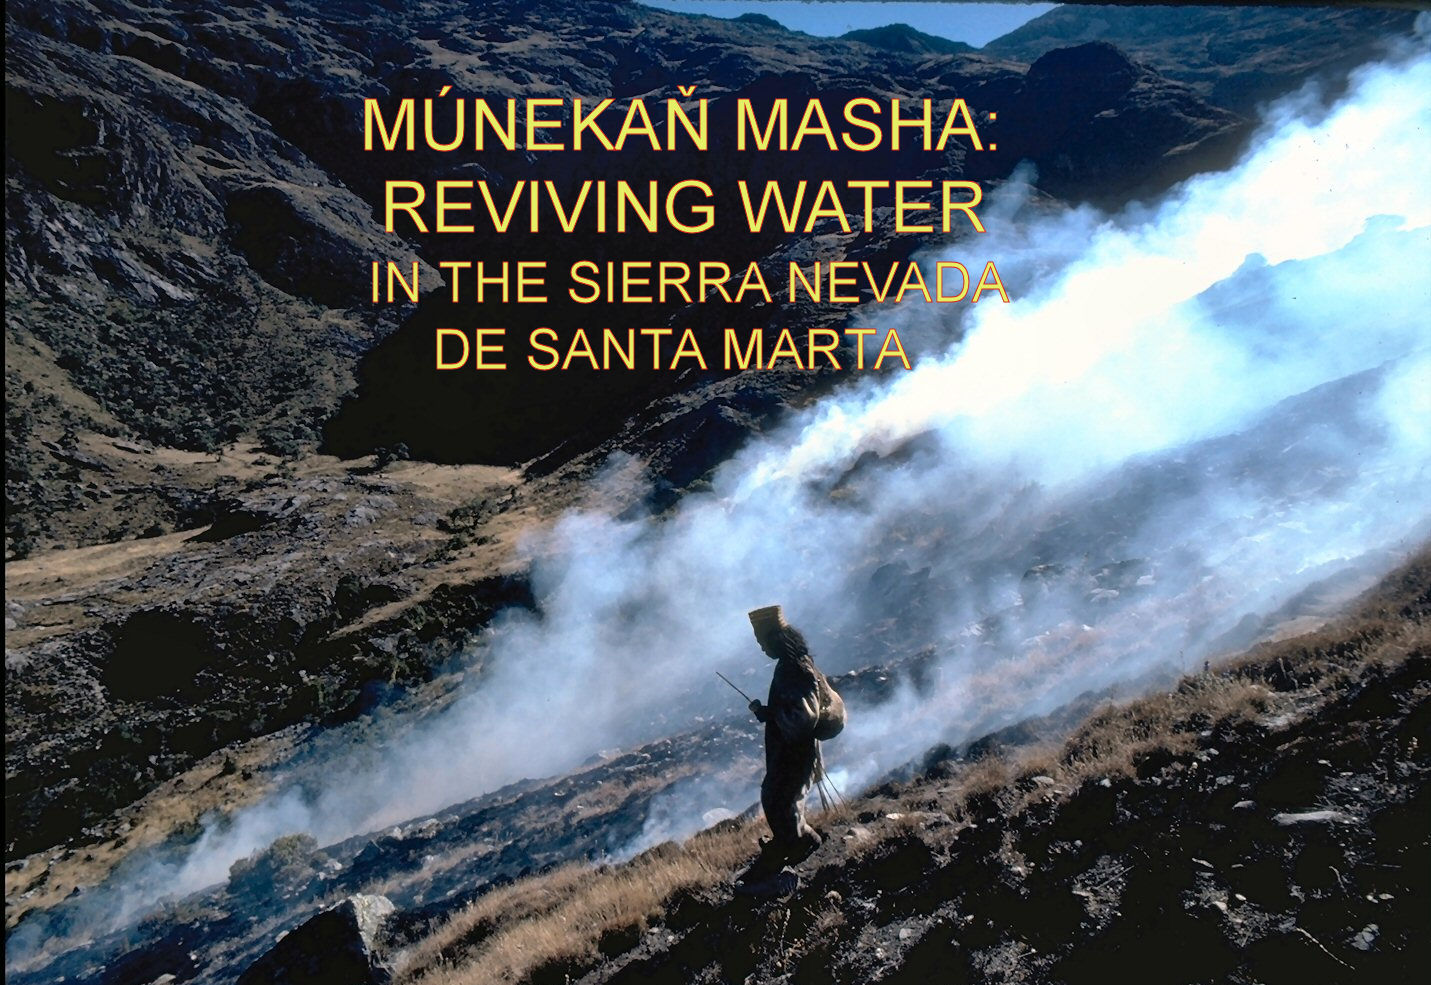 Munekan Masha: Reviving Water in the Sierra Nevada de Santa Marta